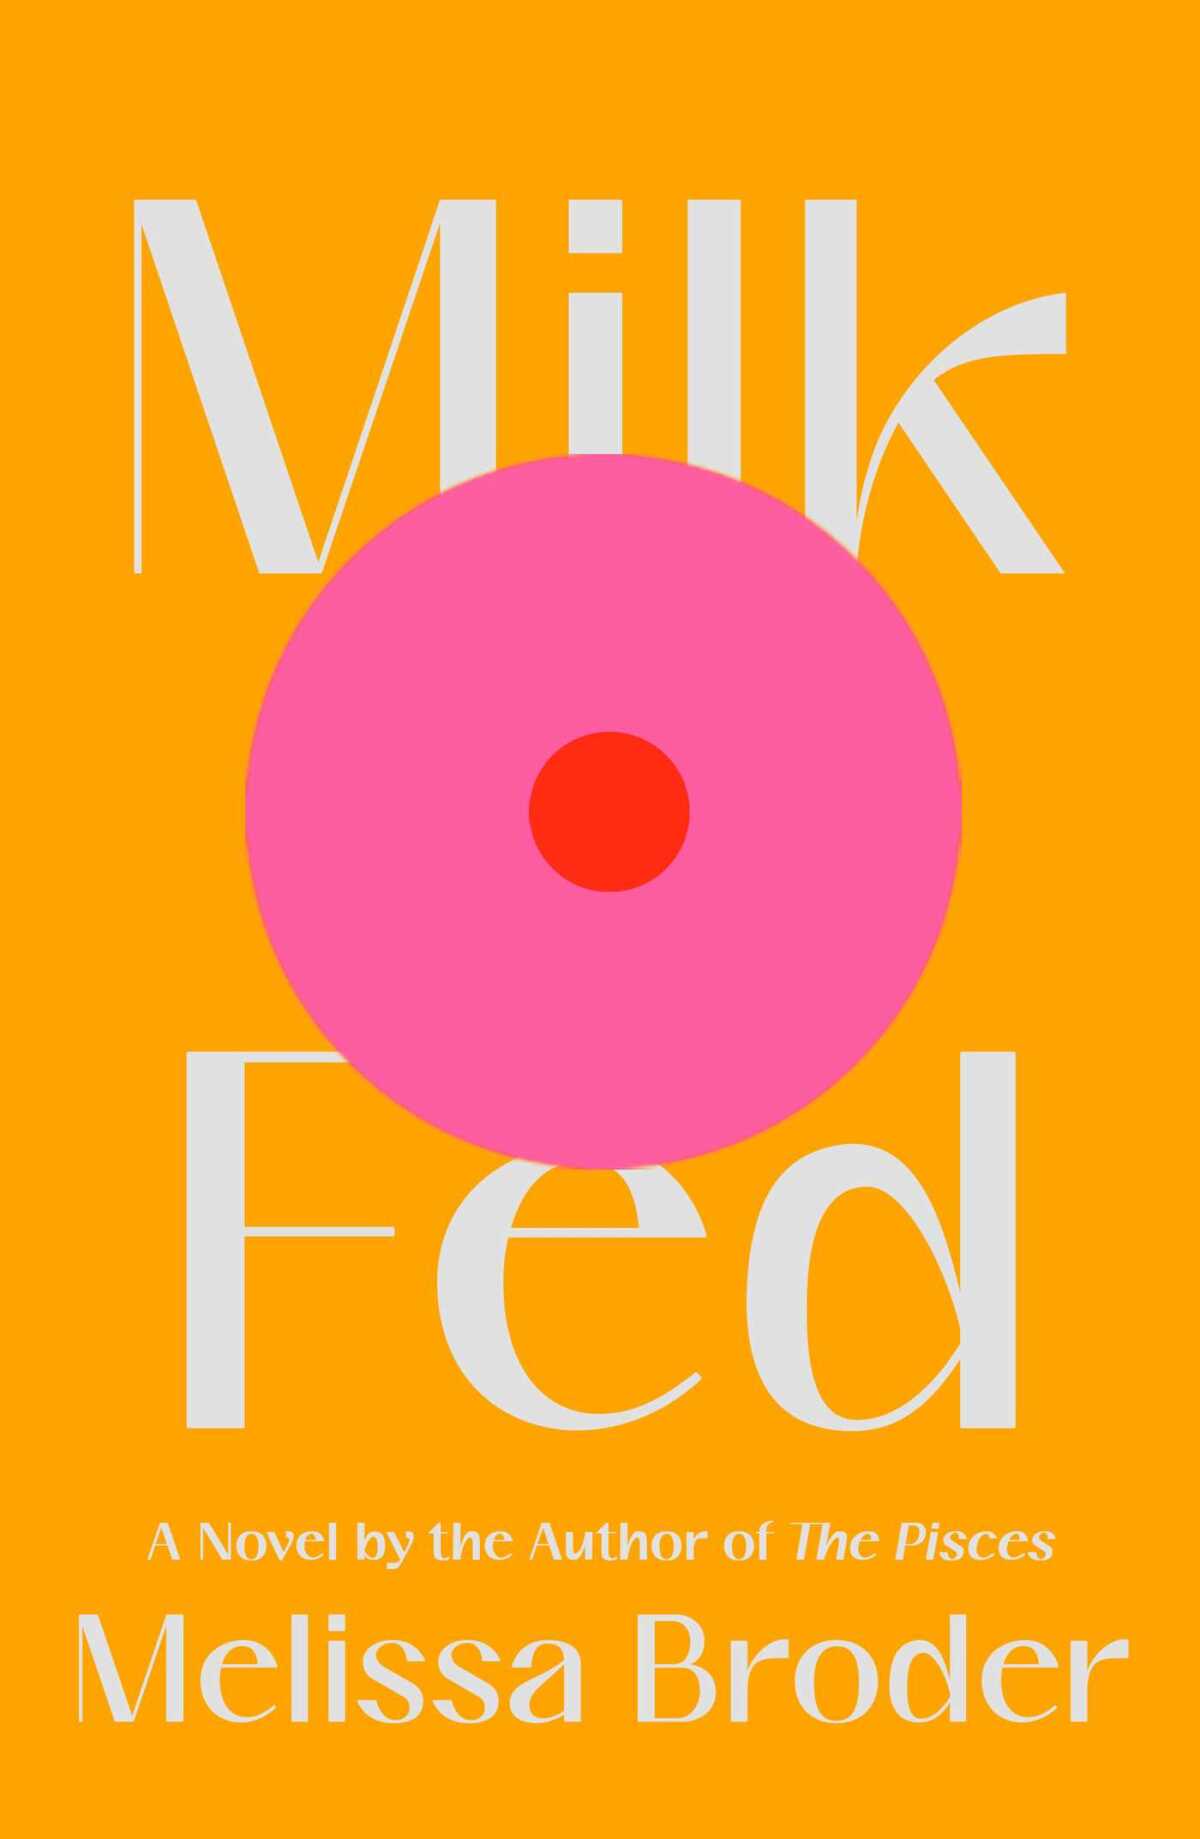 "Milk Fed," by Melissa Broder.